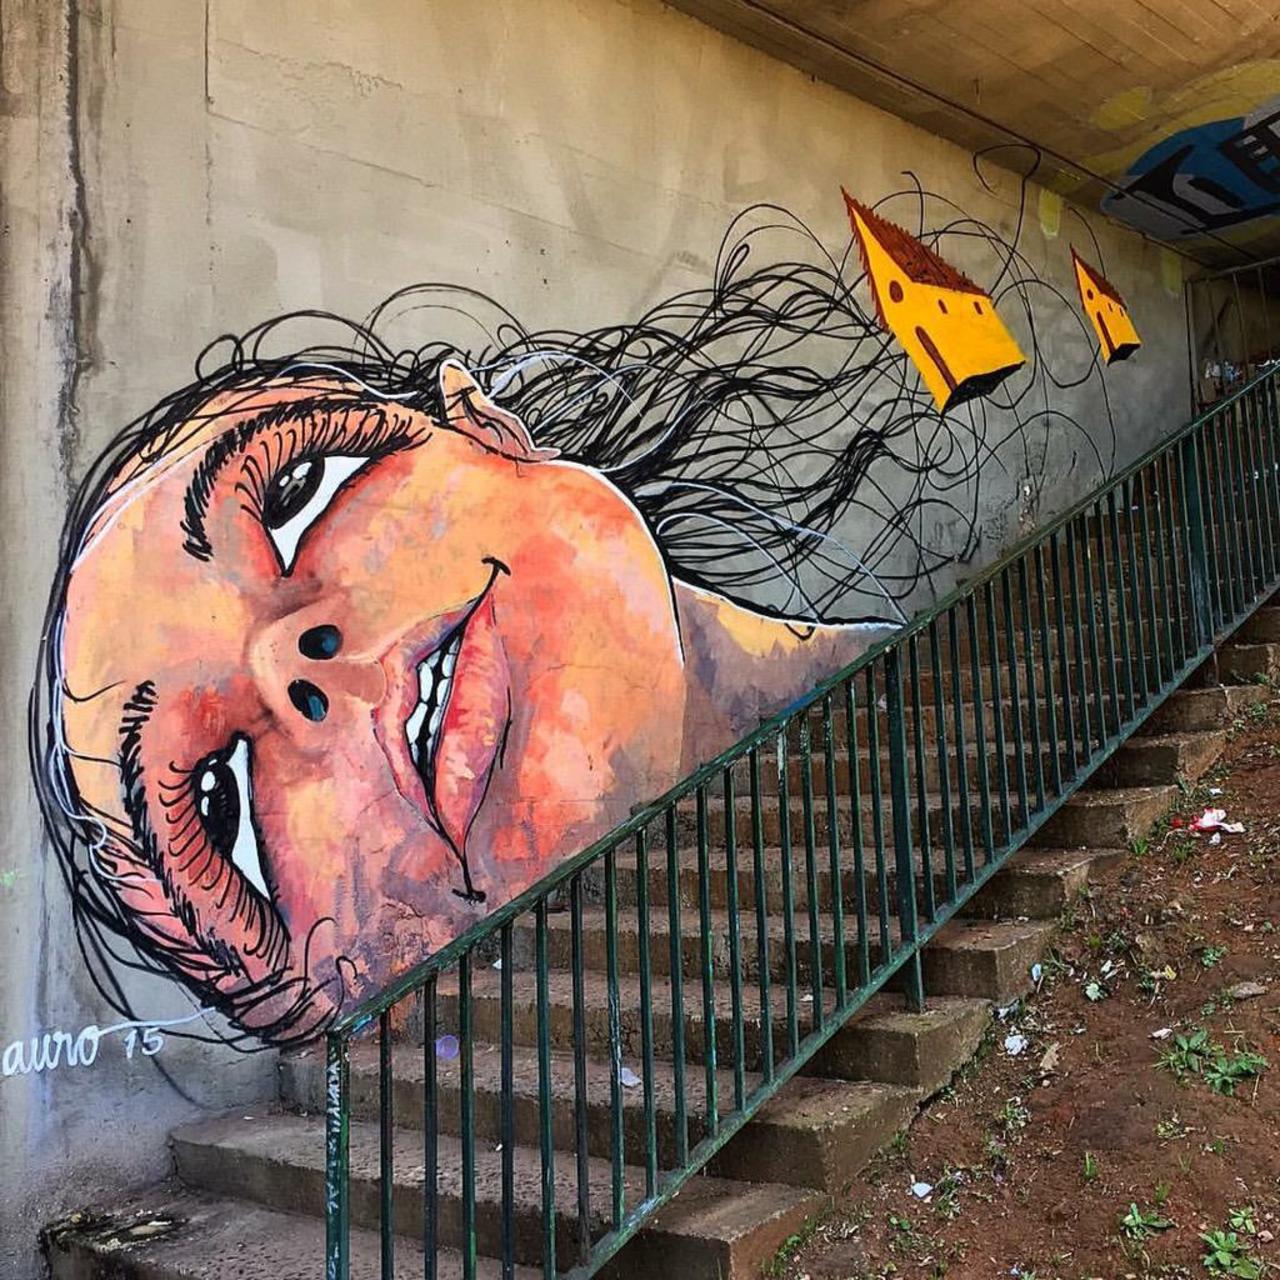 Street Art by Reveracidade in São Paulo 

#art #graffiti #mural #streetart http://t.co/WFTyJvyz0h